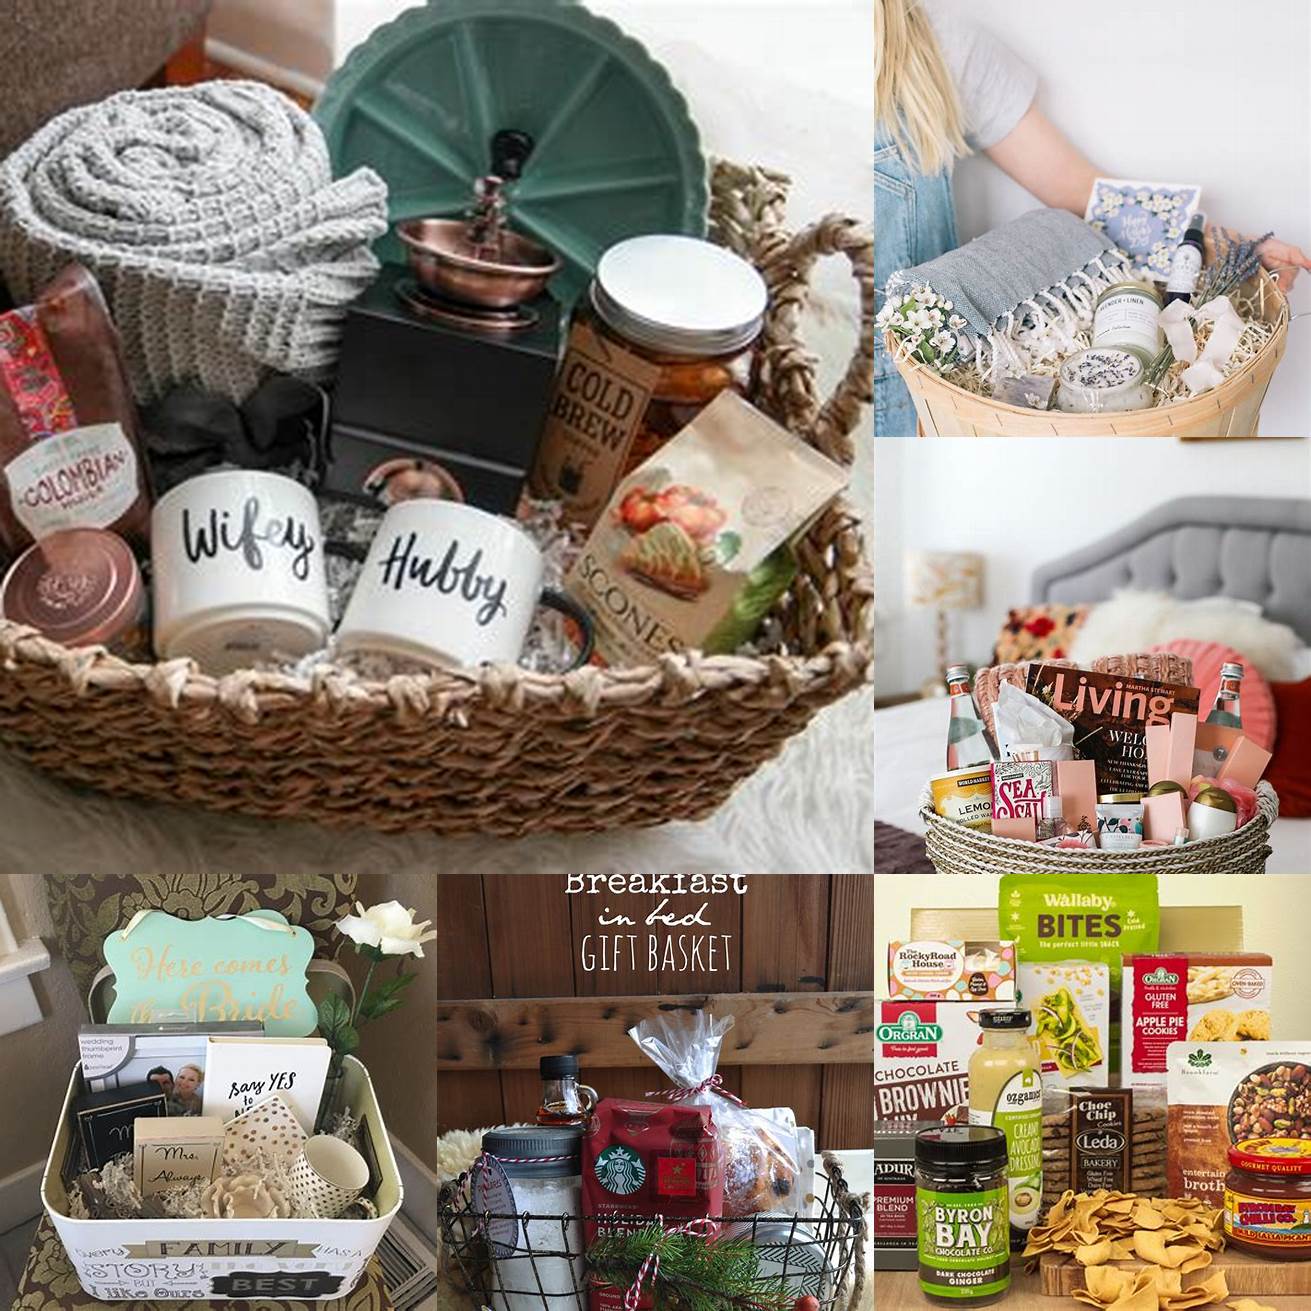 Images of Smart Bed Bites in a gift basket